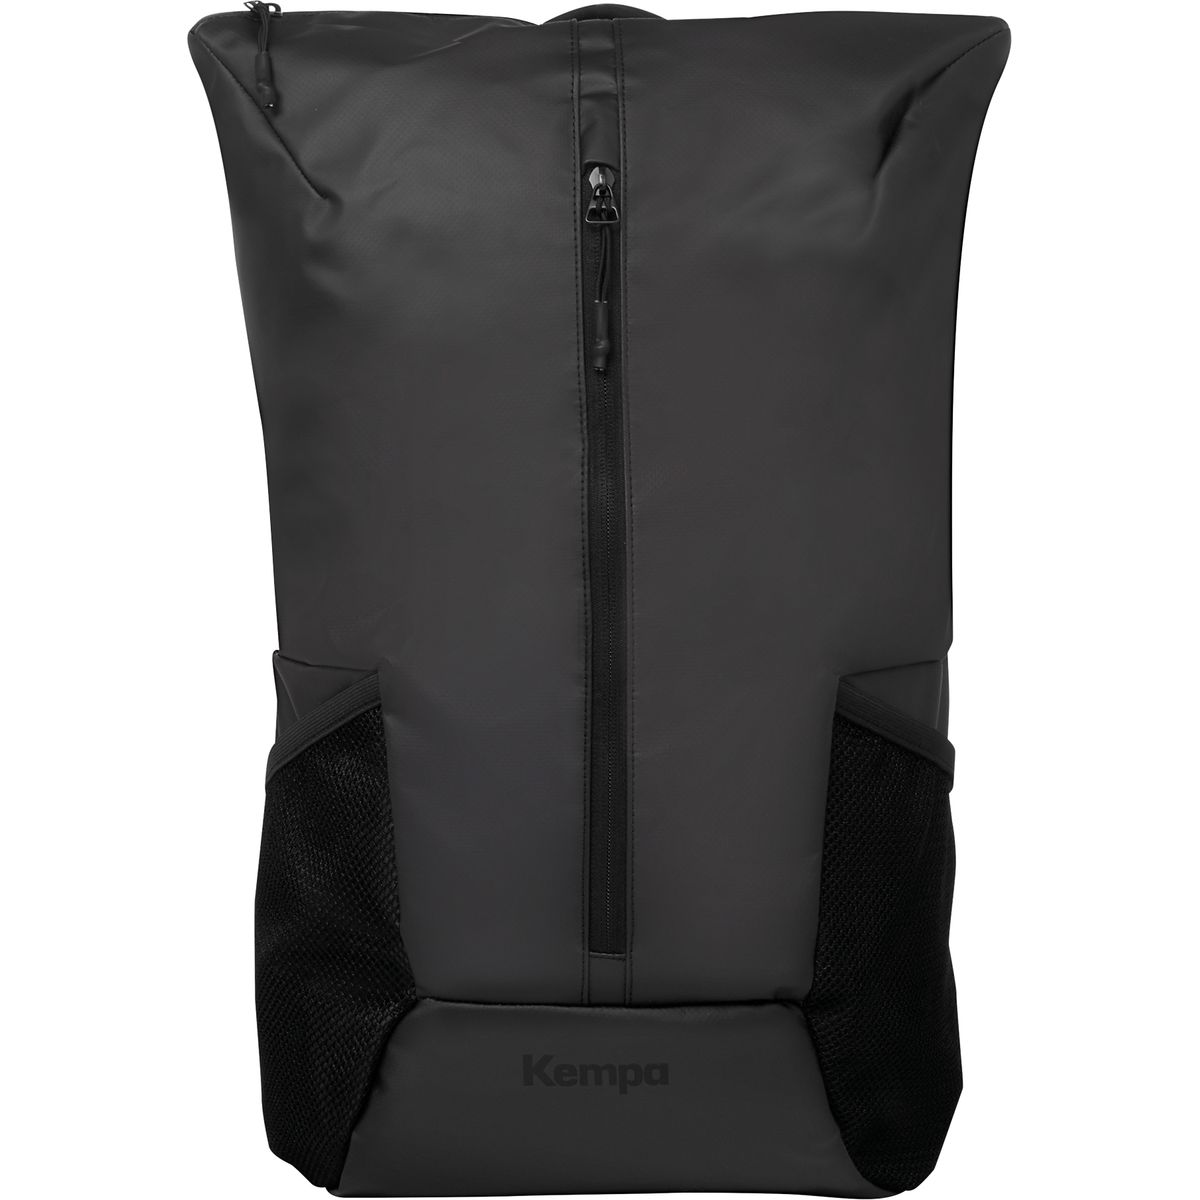 Kempa Premium Daybag